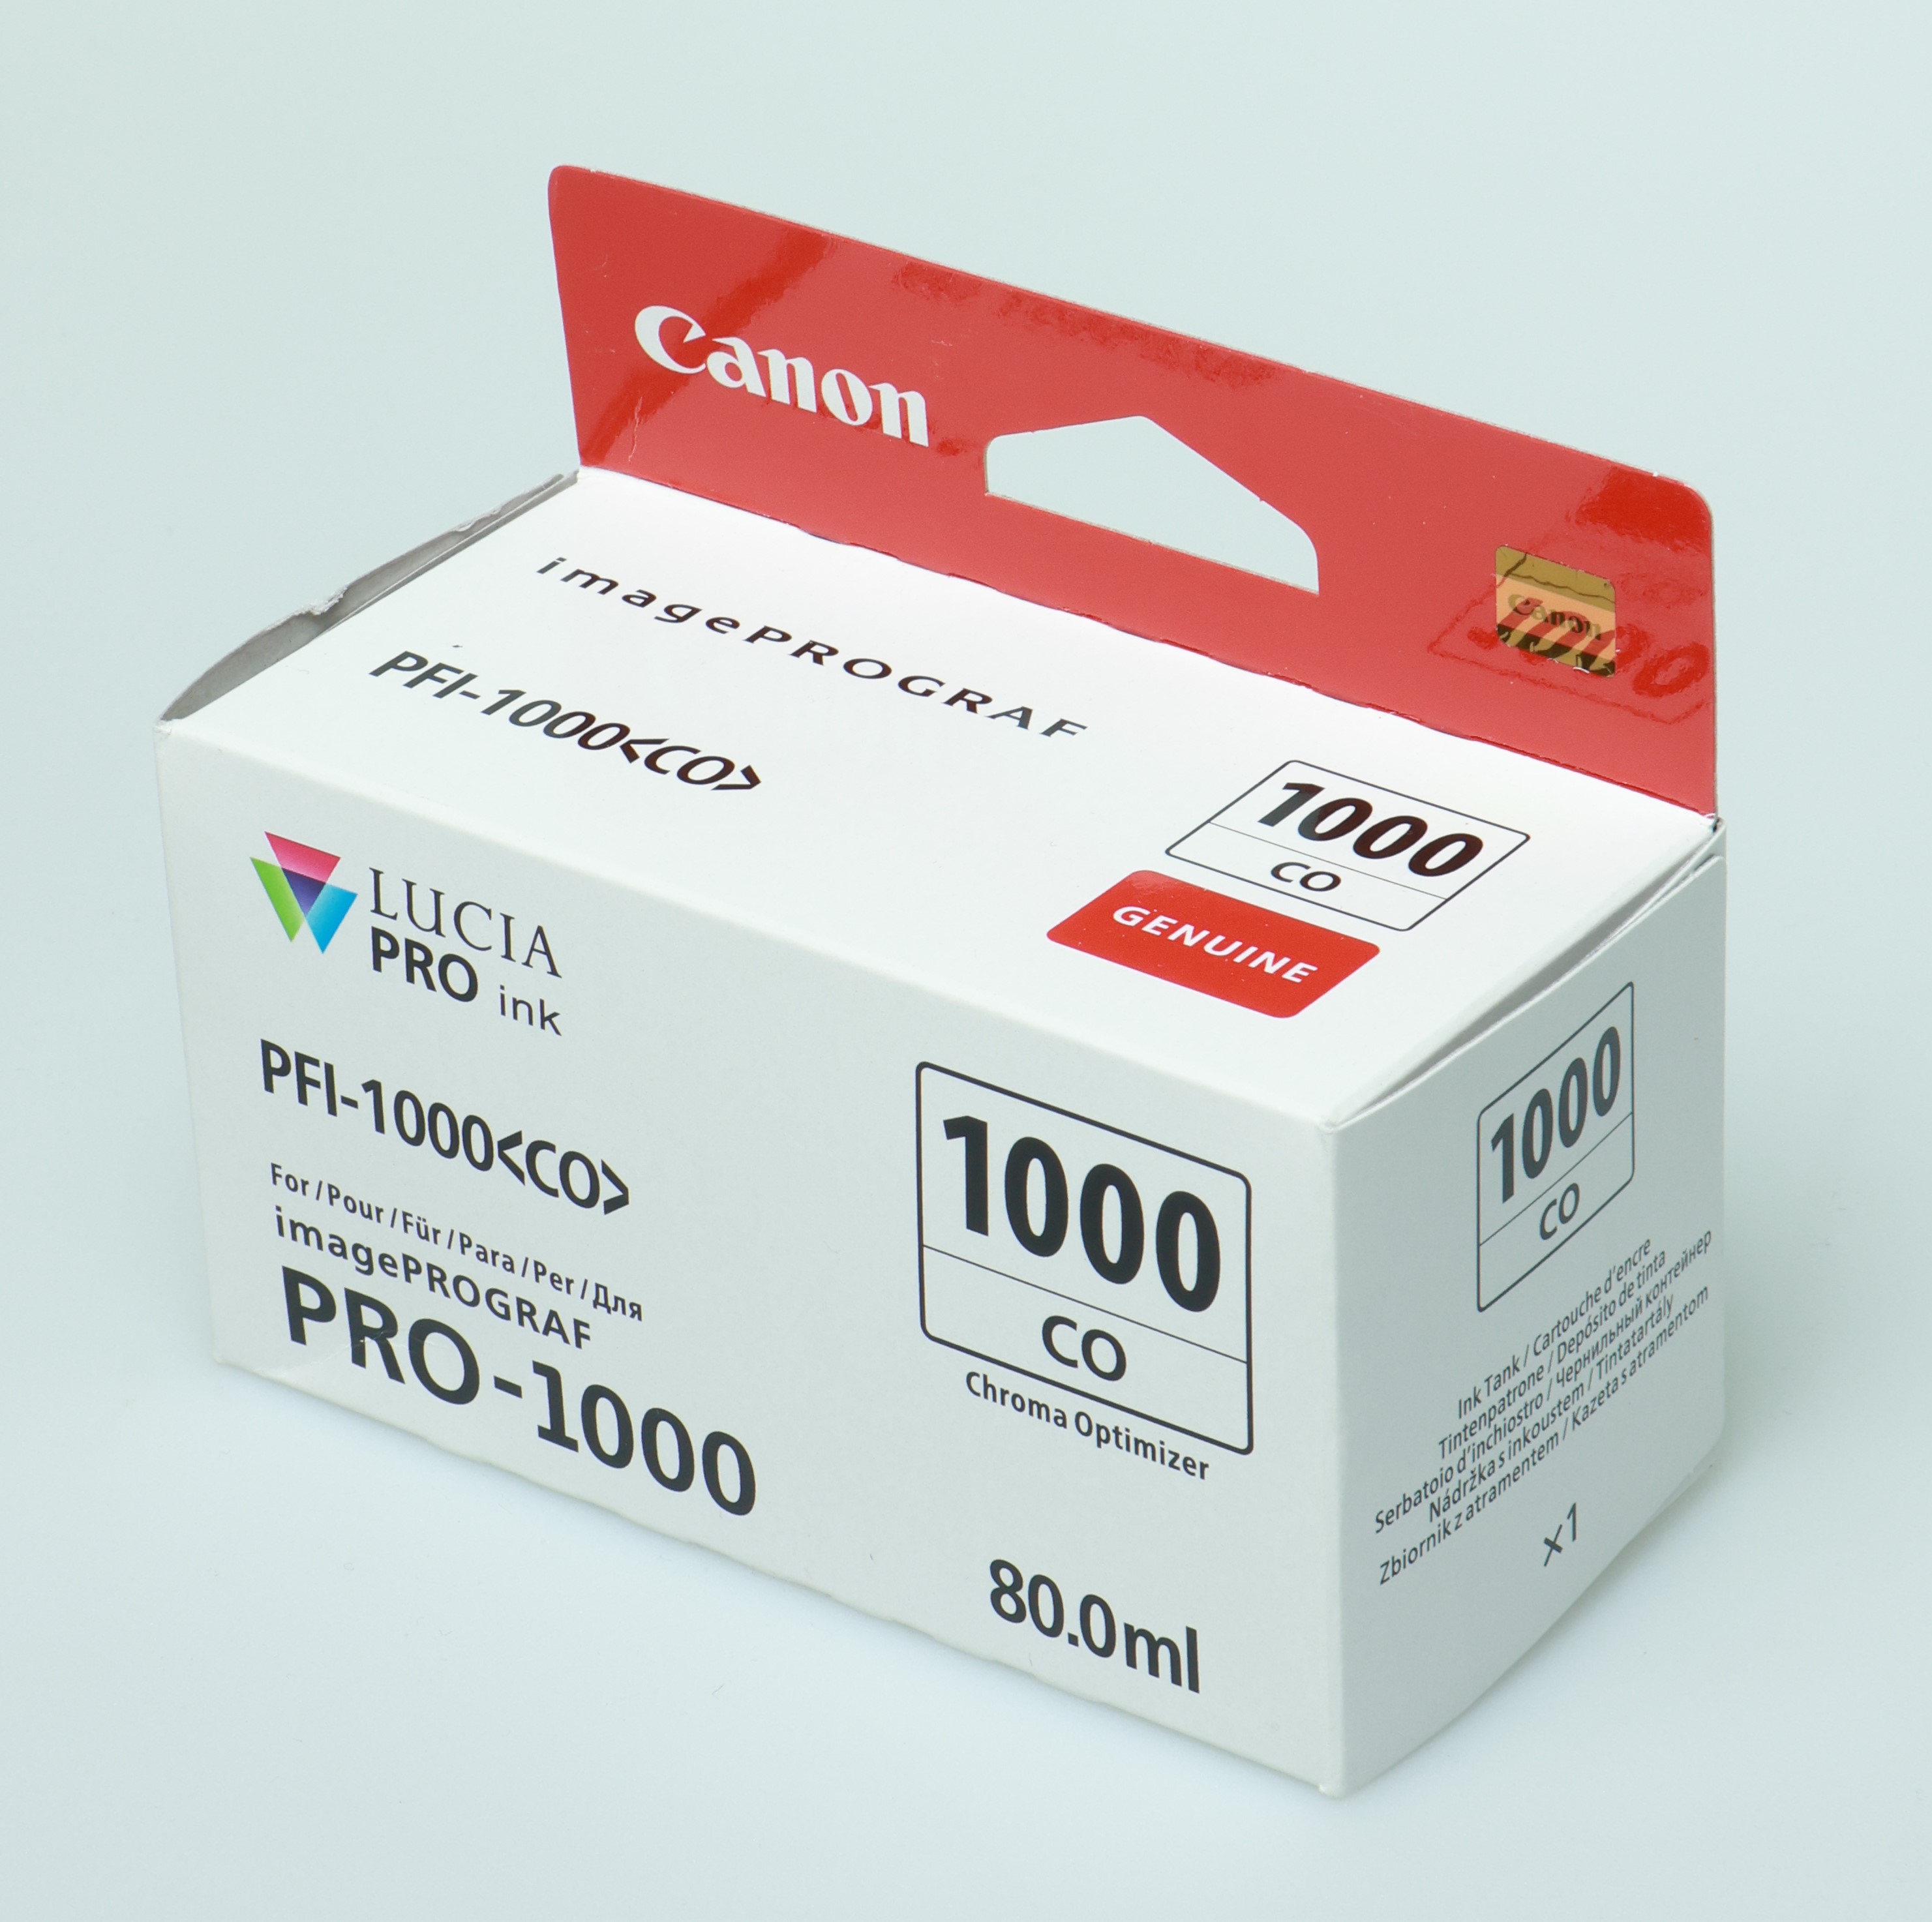 CO Chroma Optimizer, Canon professionel blæk til PRO 1000, 80 ml  